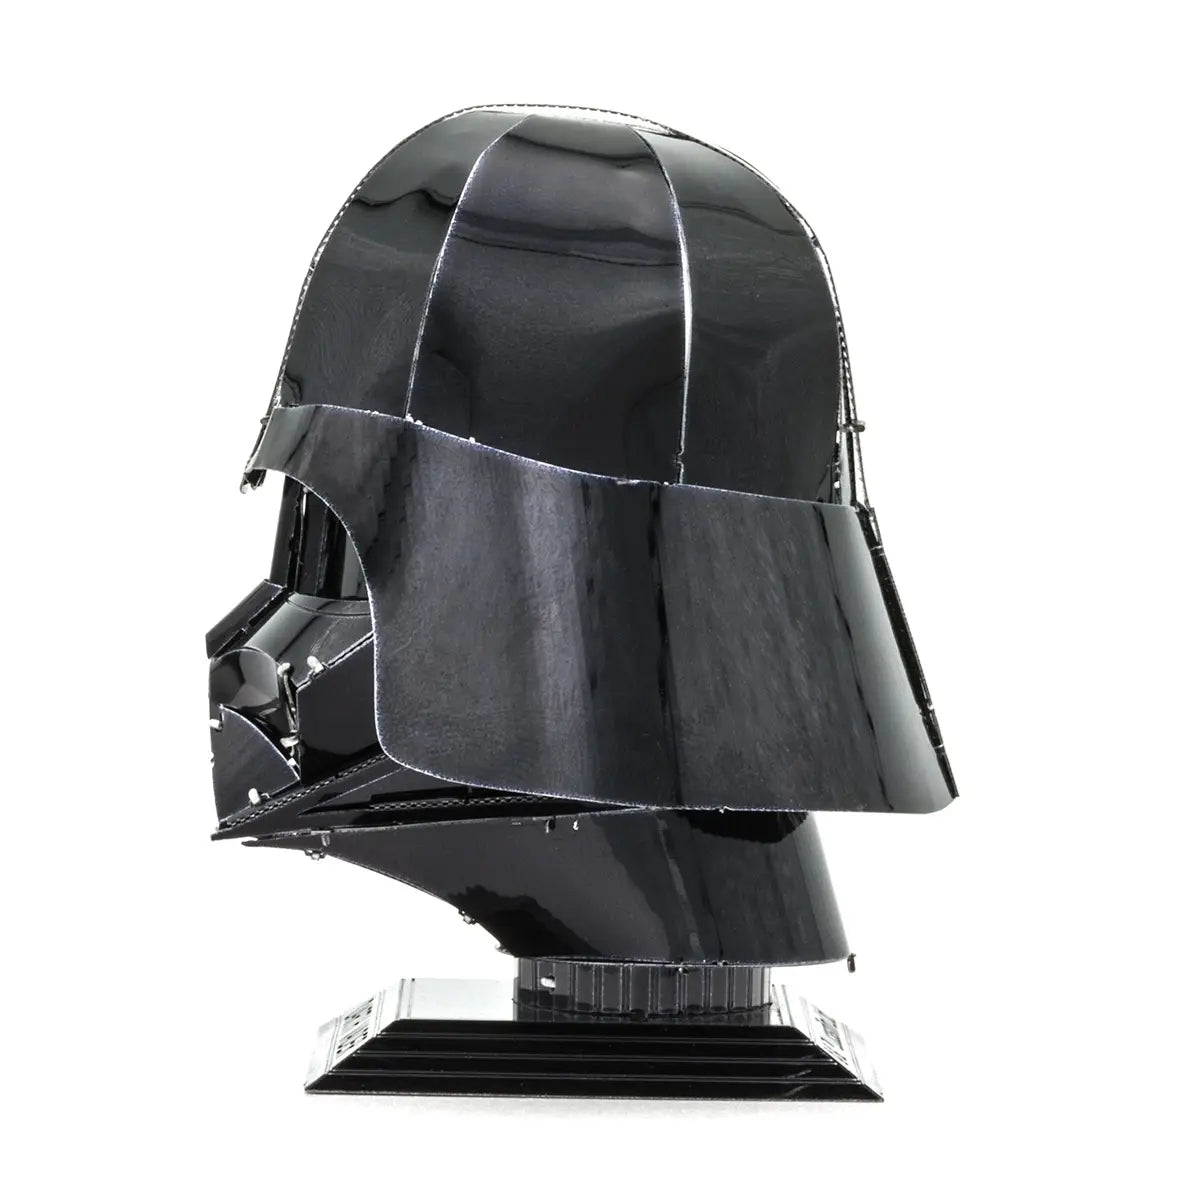 Star Wars Official 3D Metal Model Kit: 3in High Detail Darth Vader Helmet Built and Displayed Side View